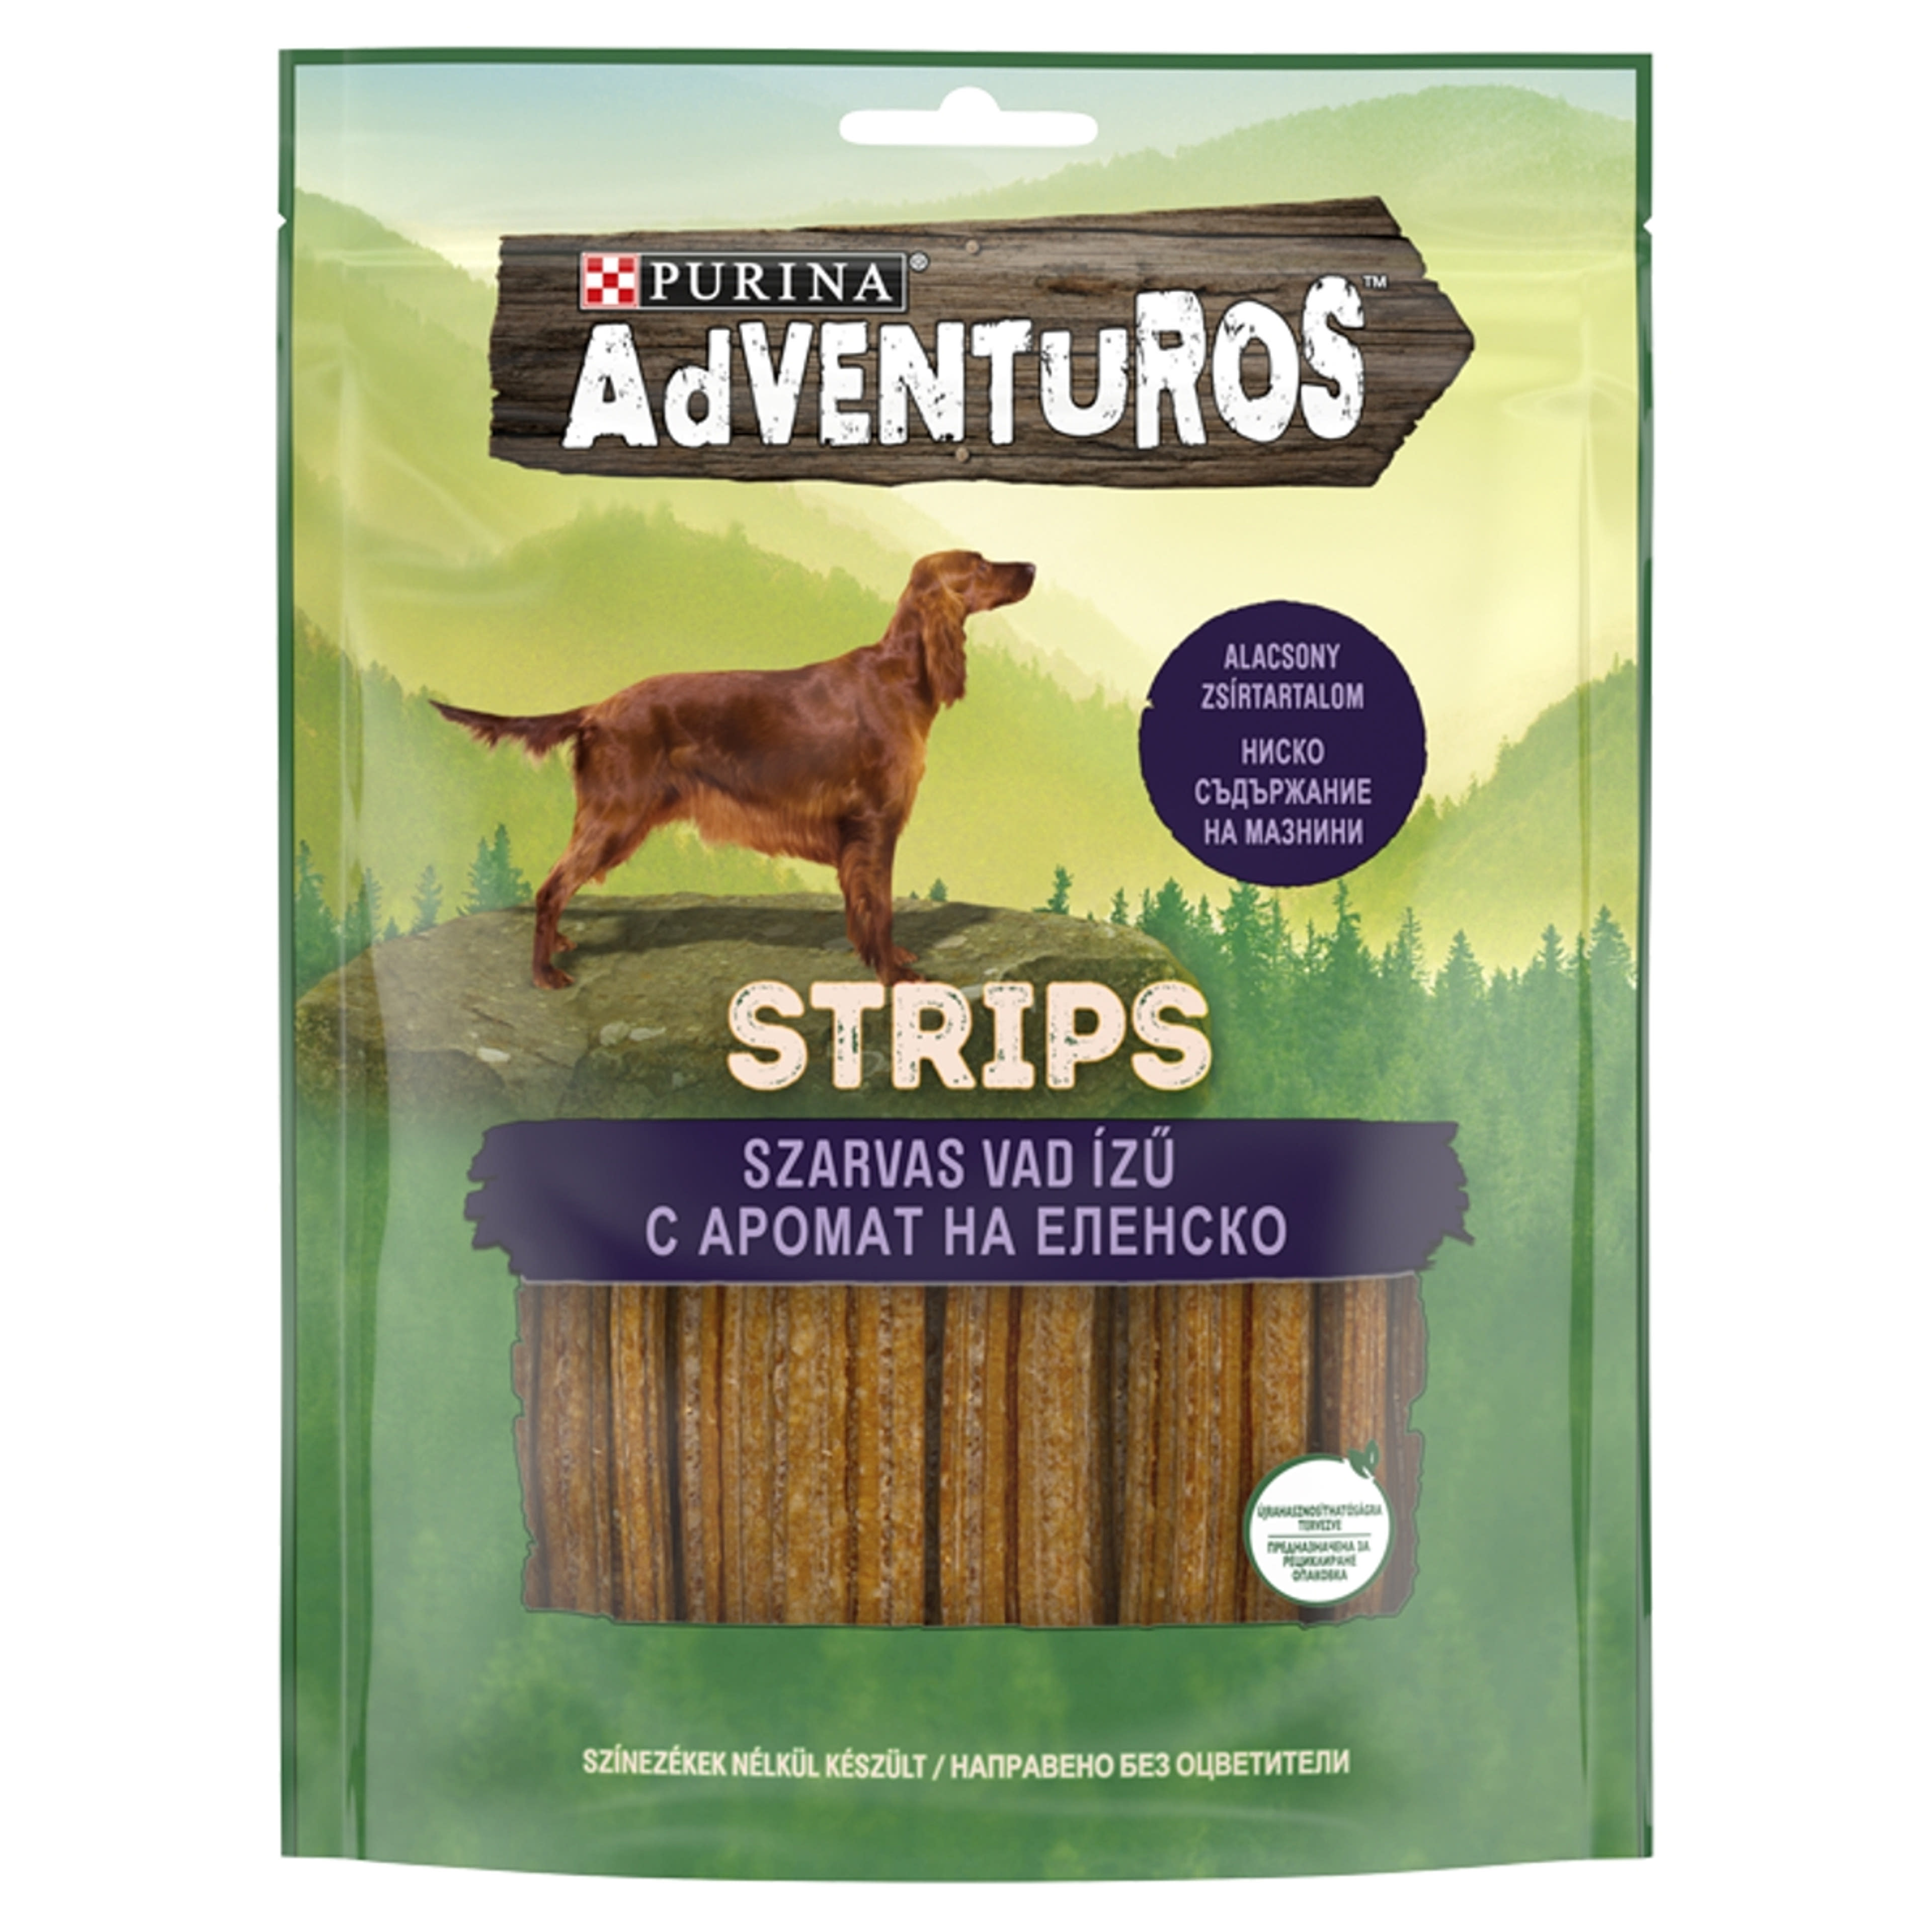 Purina Adventuros jutalomfalat kutyáknak, szarvas, vad ízű - 90 g-2